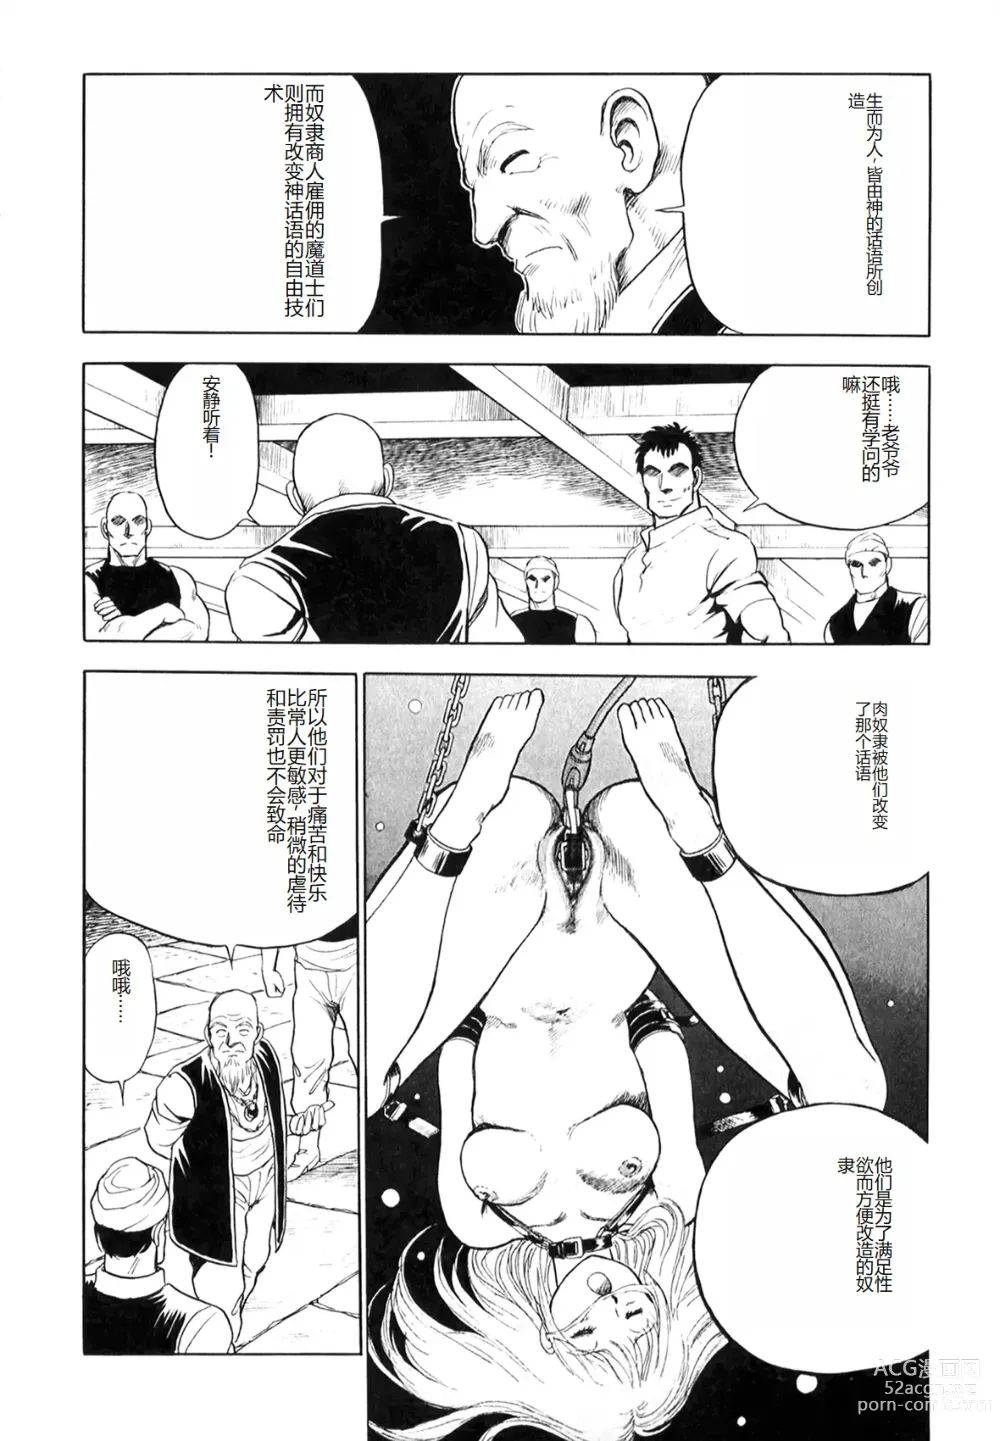 Page 281 of manga Dorei Senshi Maya I